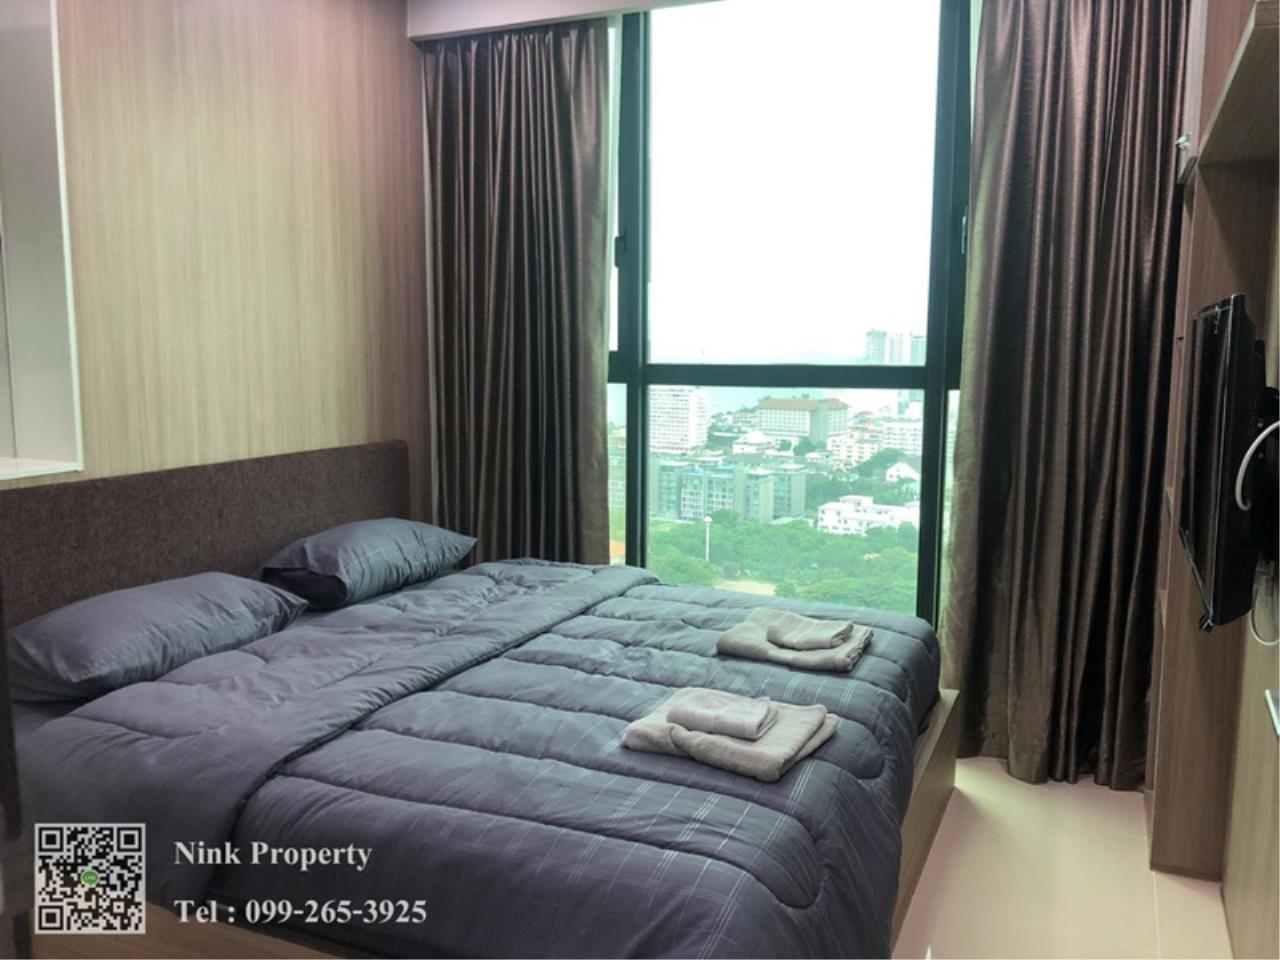 Agent - Nattapassorn Saksrisuwan Agency's Dusit Grand Condo View / Condo for Rent / 1 BED / 35 sq.m. / High floor / Sea view / Jomthien Beach / Pattaya 4